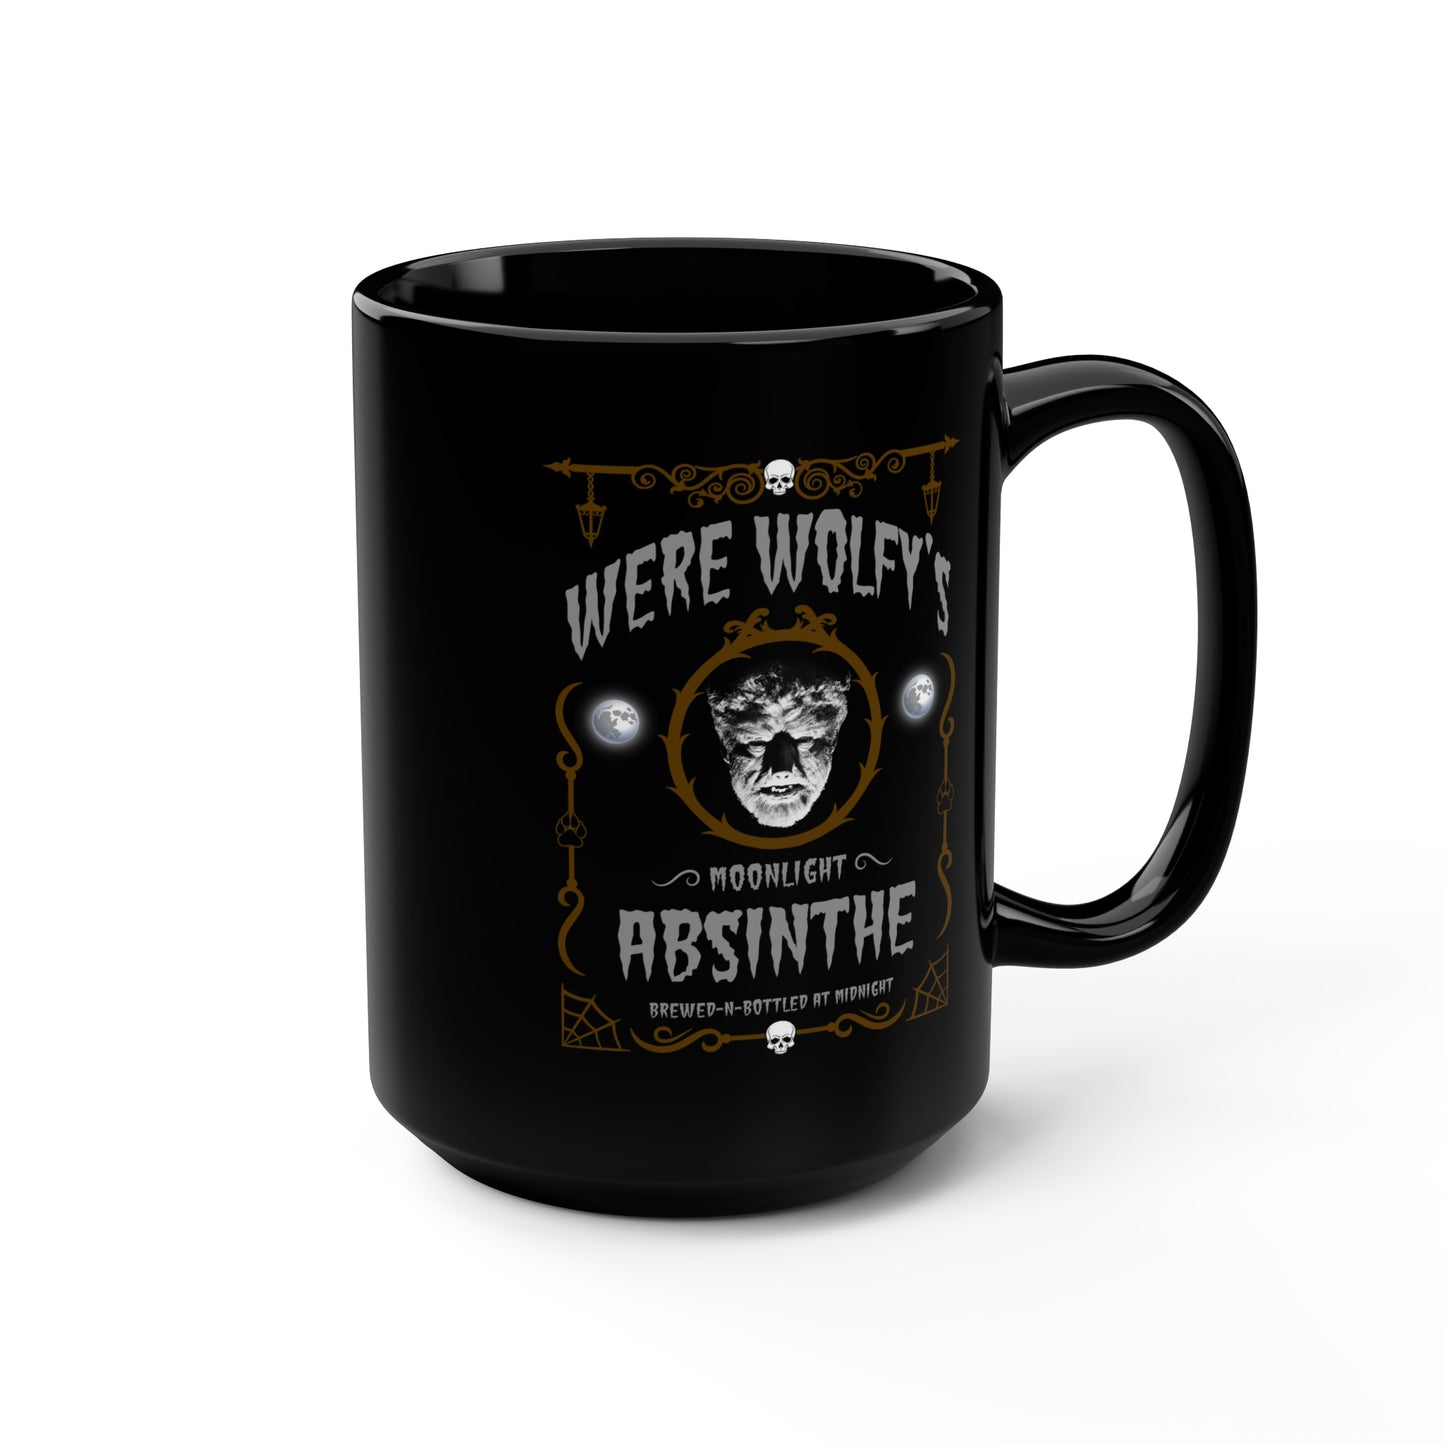 ABSINTHE MONSTERS 10 (WERE WOLFY) Black Mug, 15oz